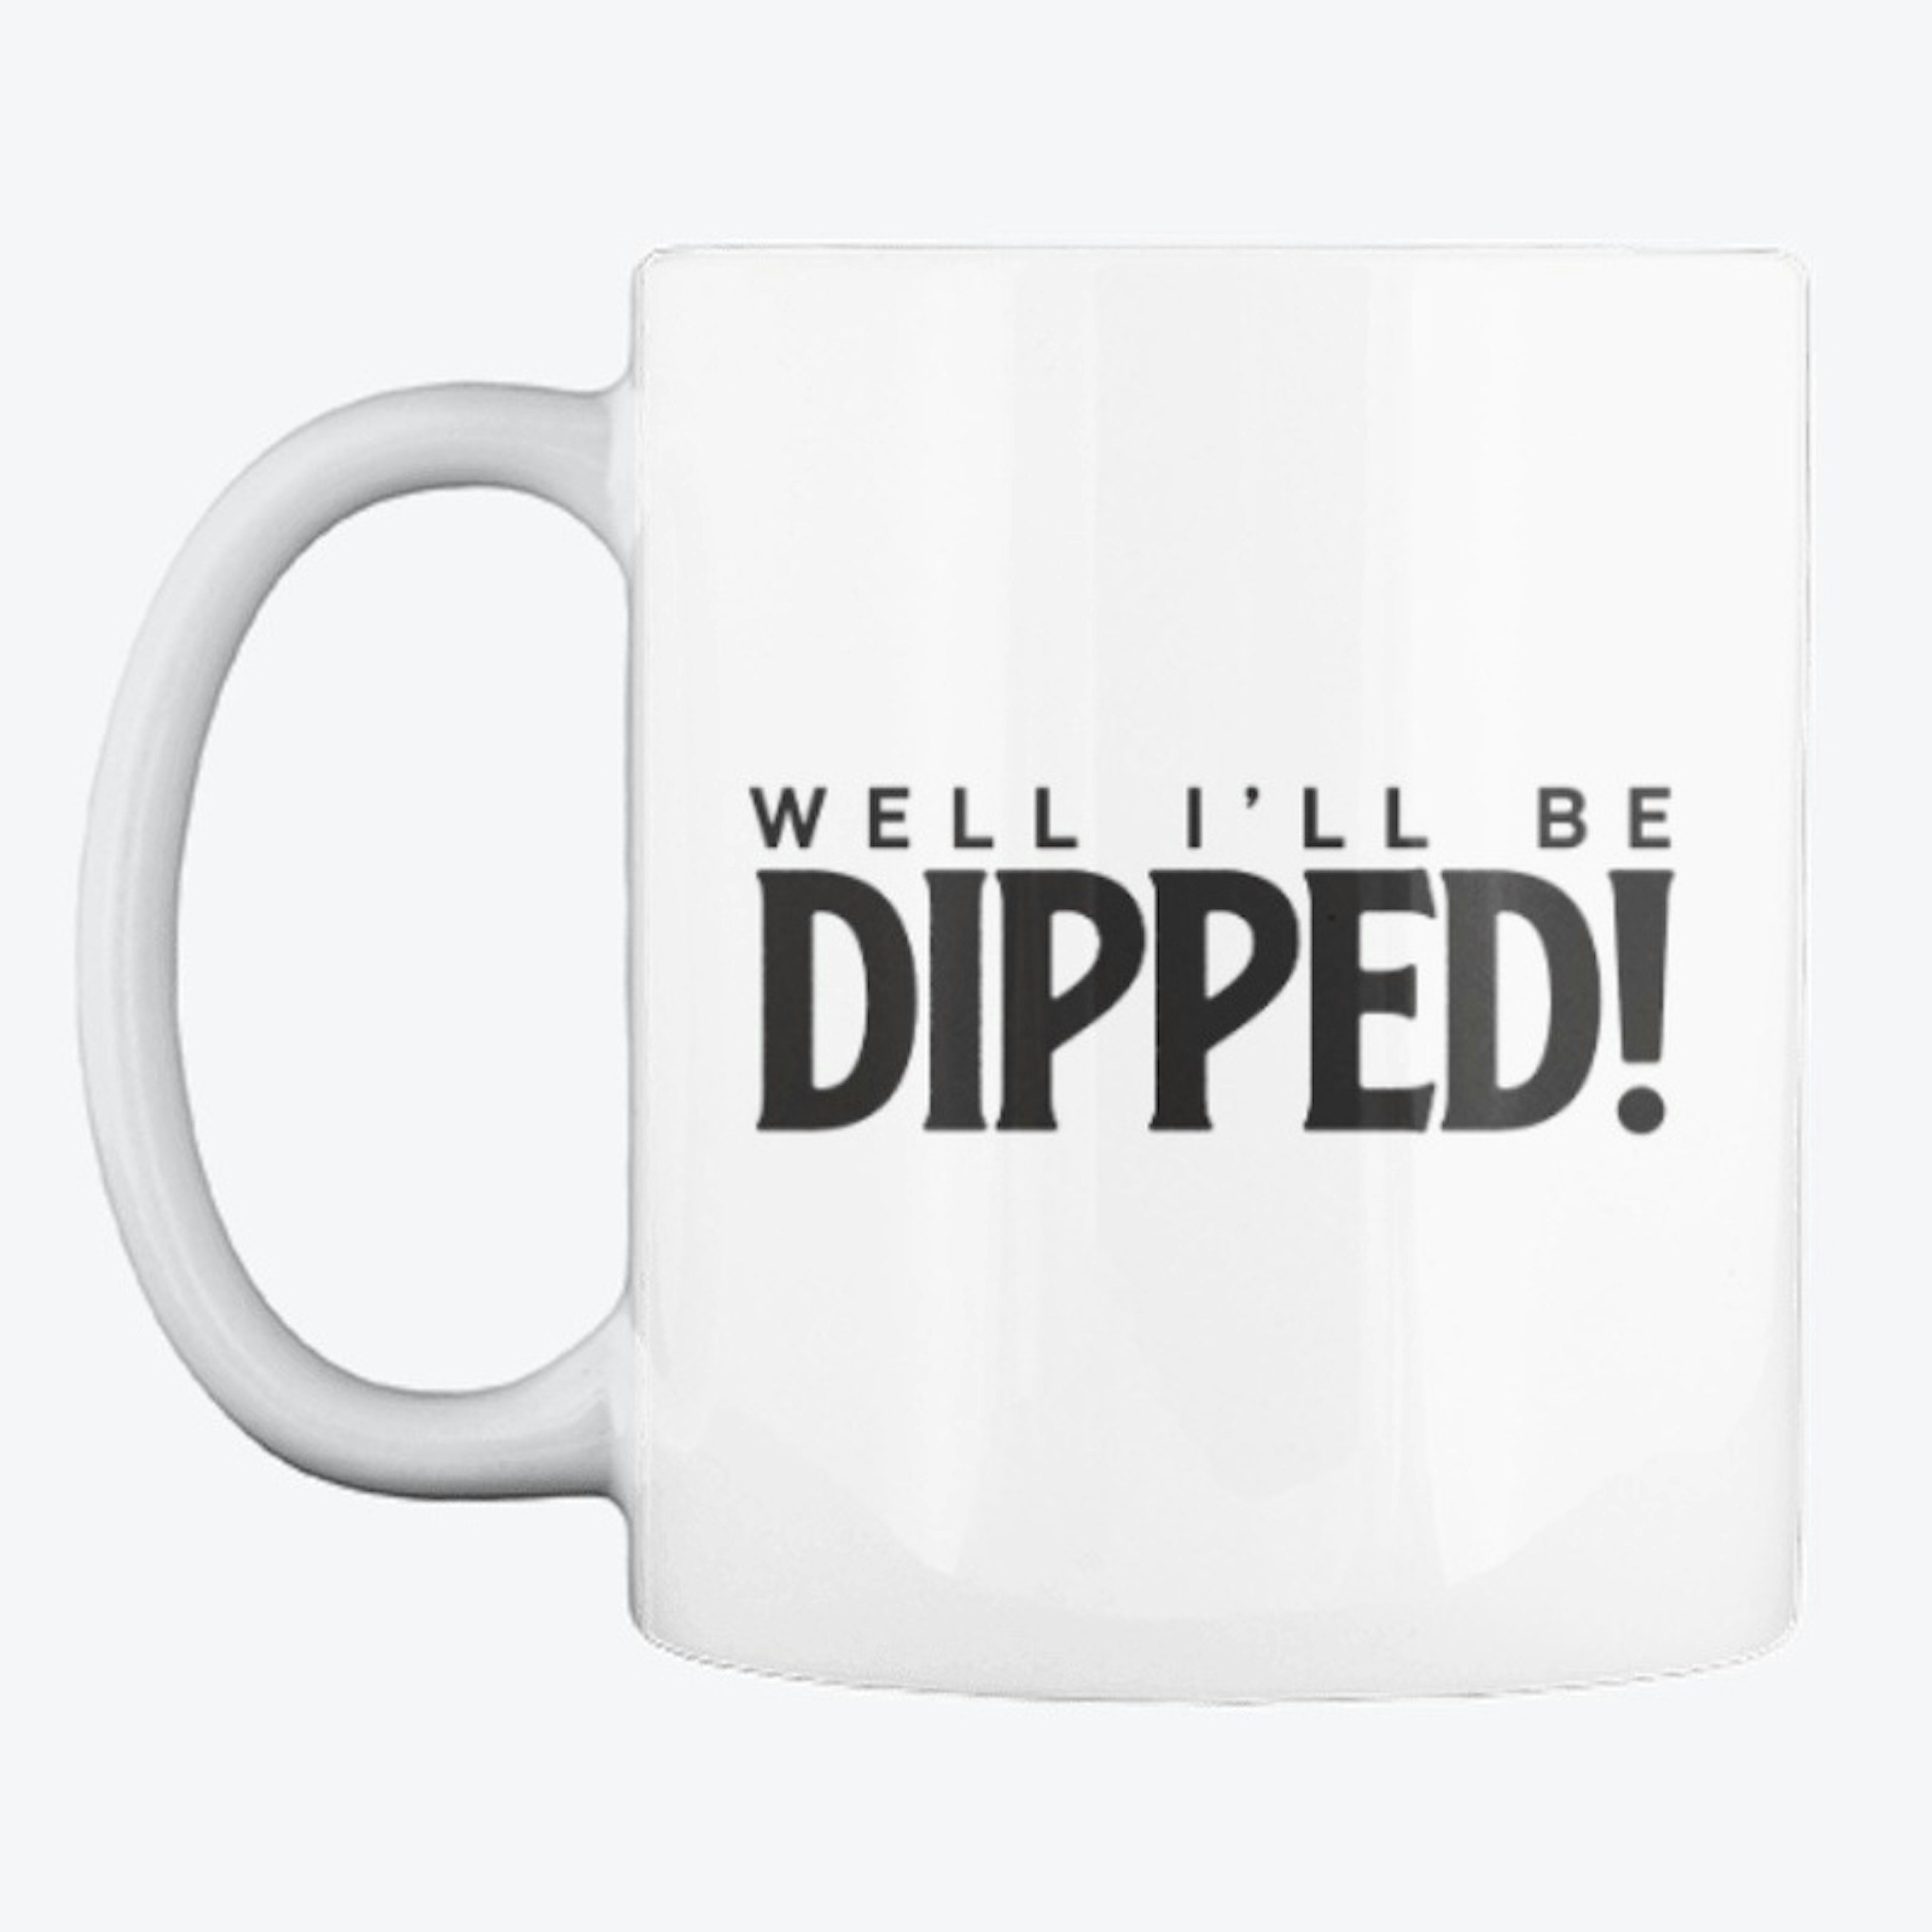 I'll Be Dipped!